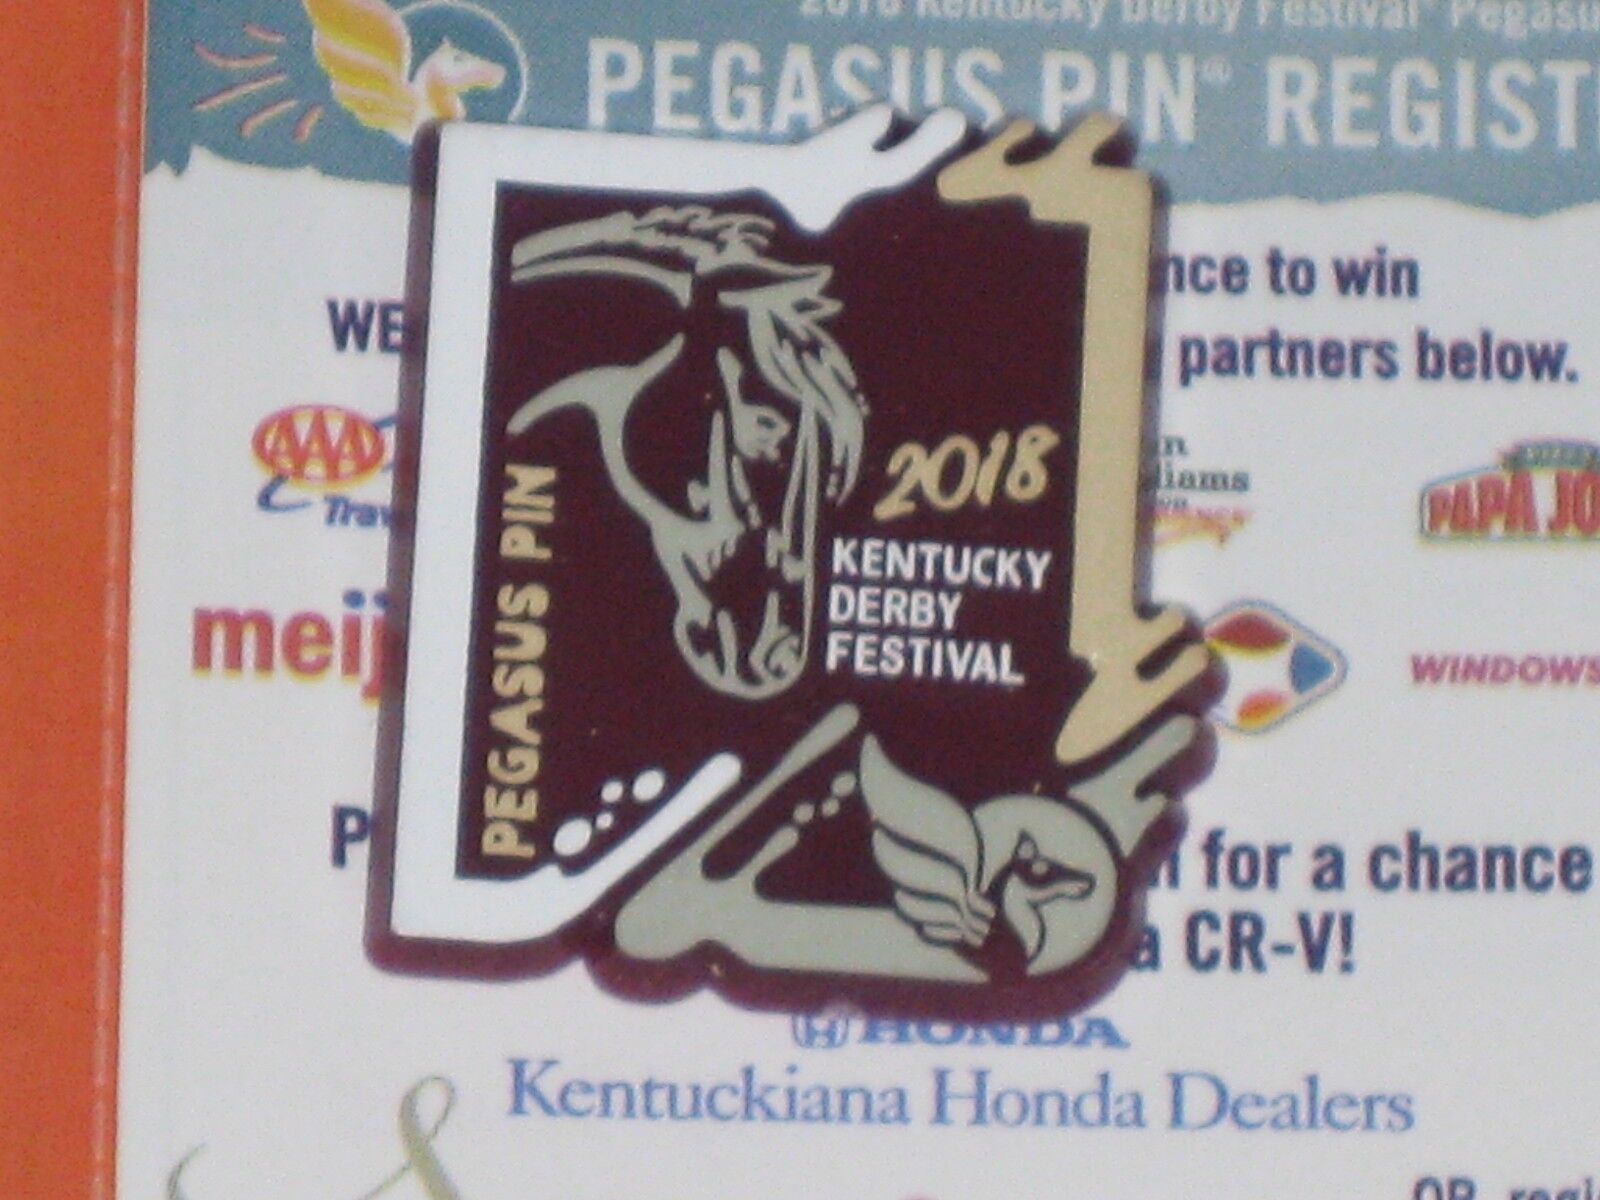 2018 Kentucky Derby Festival Pegasus Pin